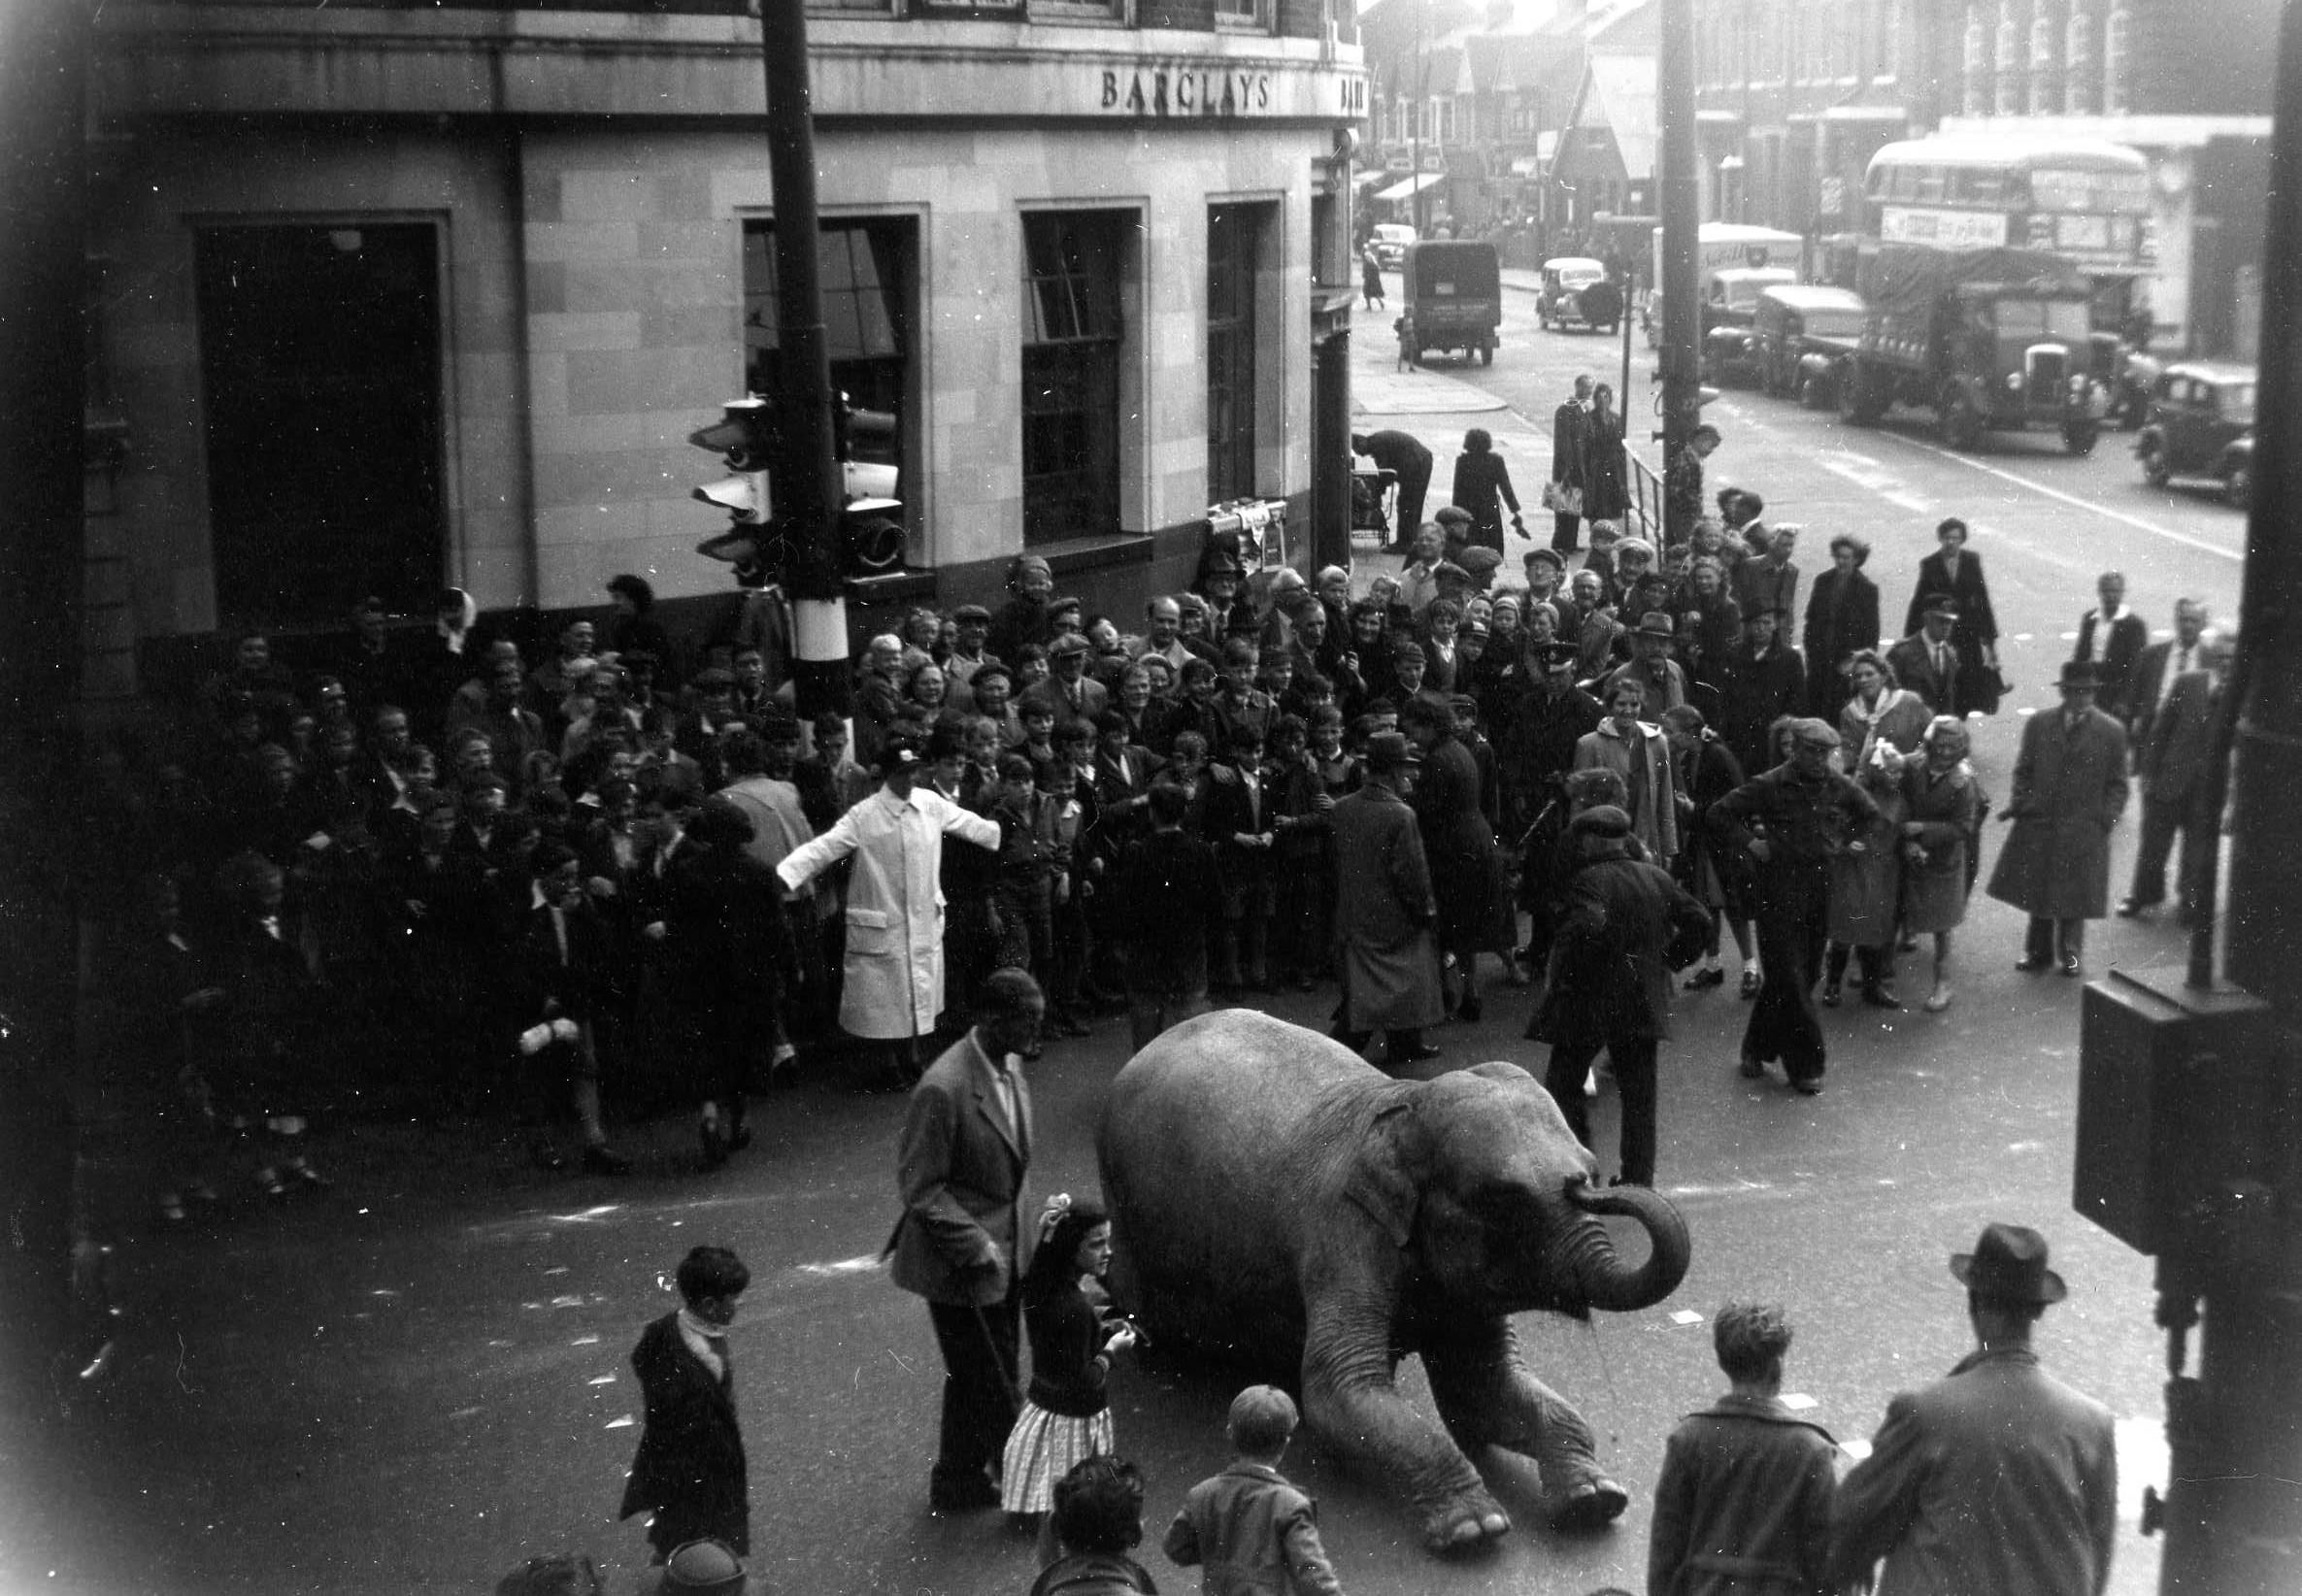 Elephant Road Safety, East Street 1953